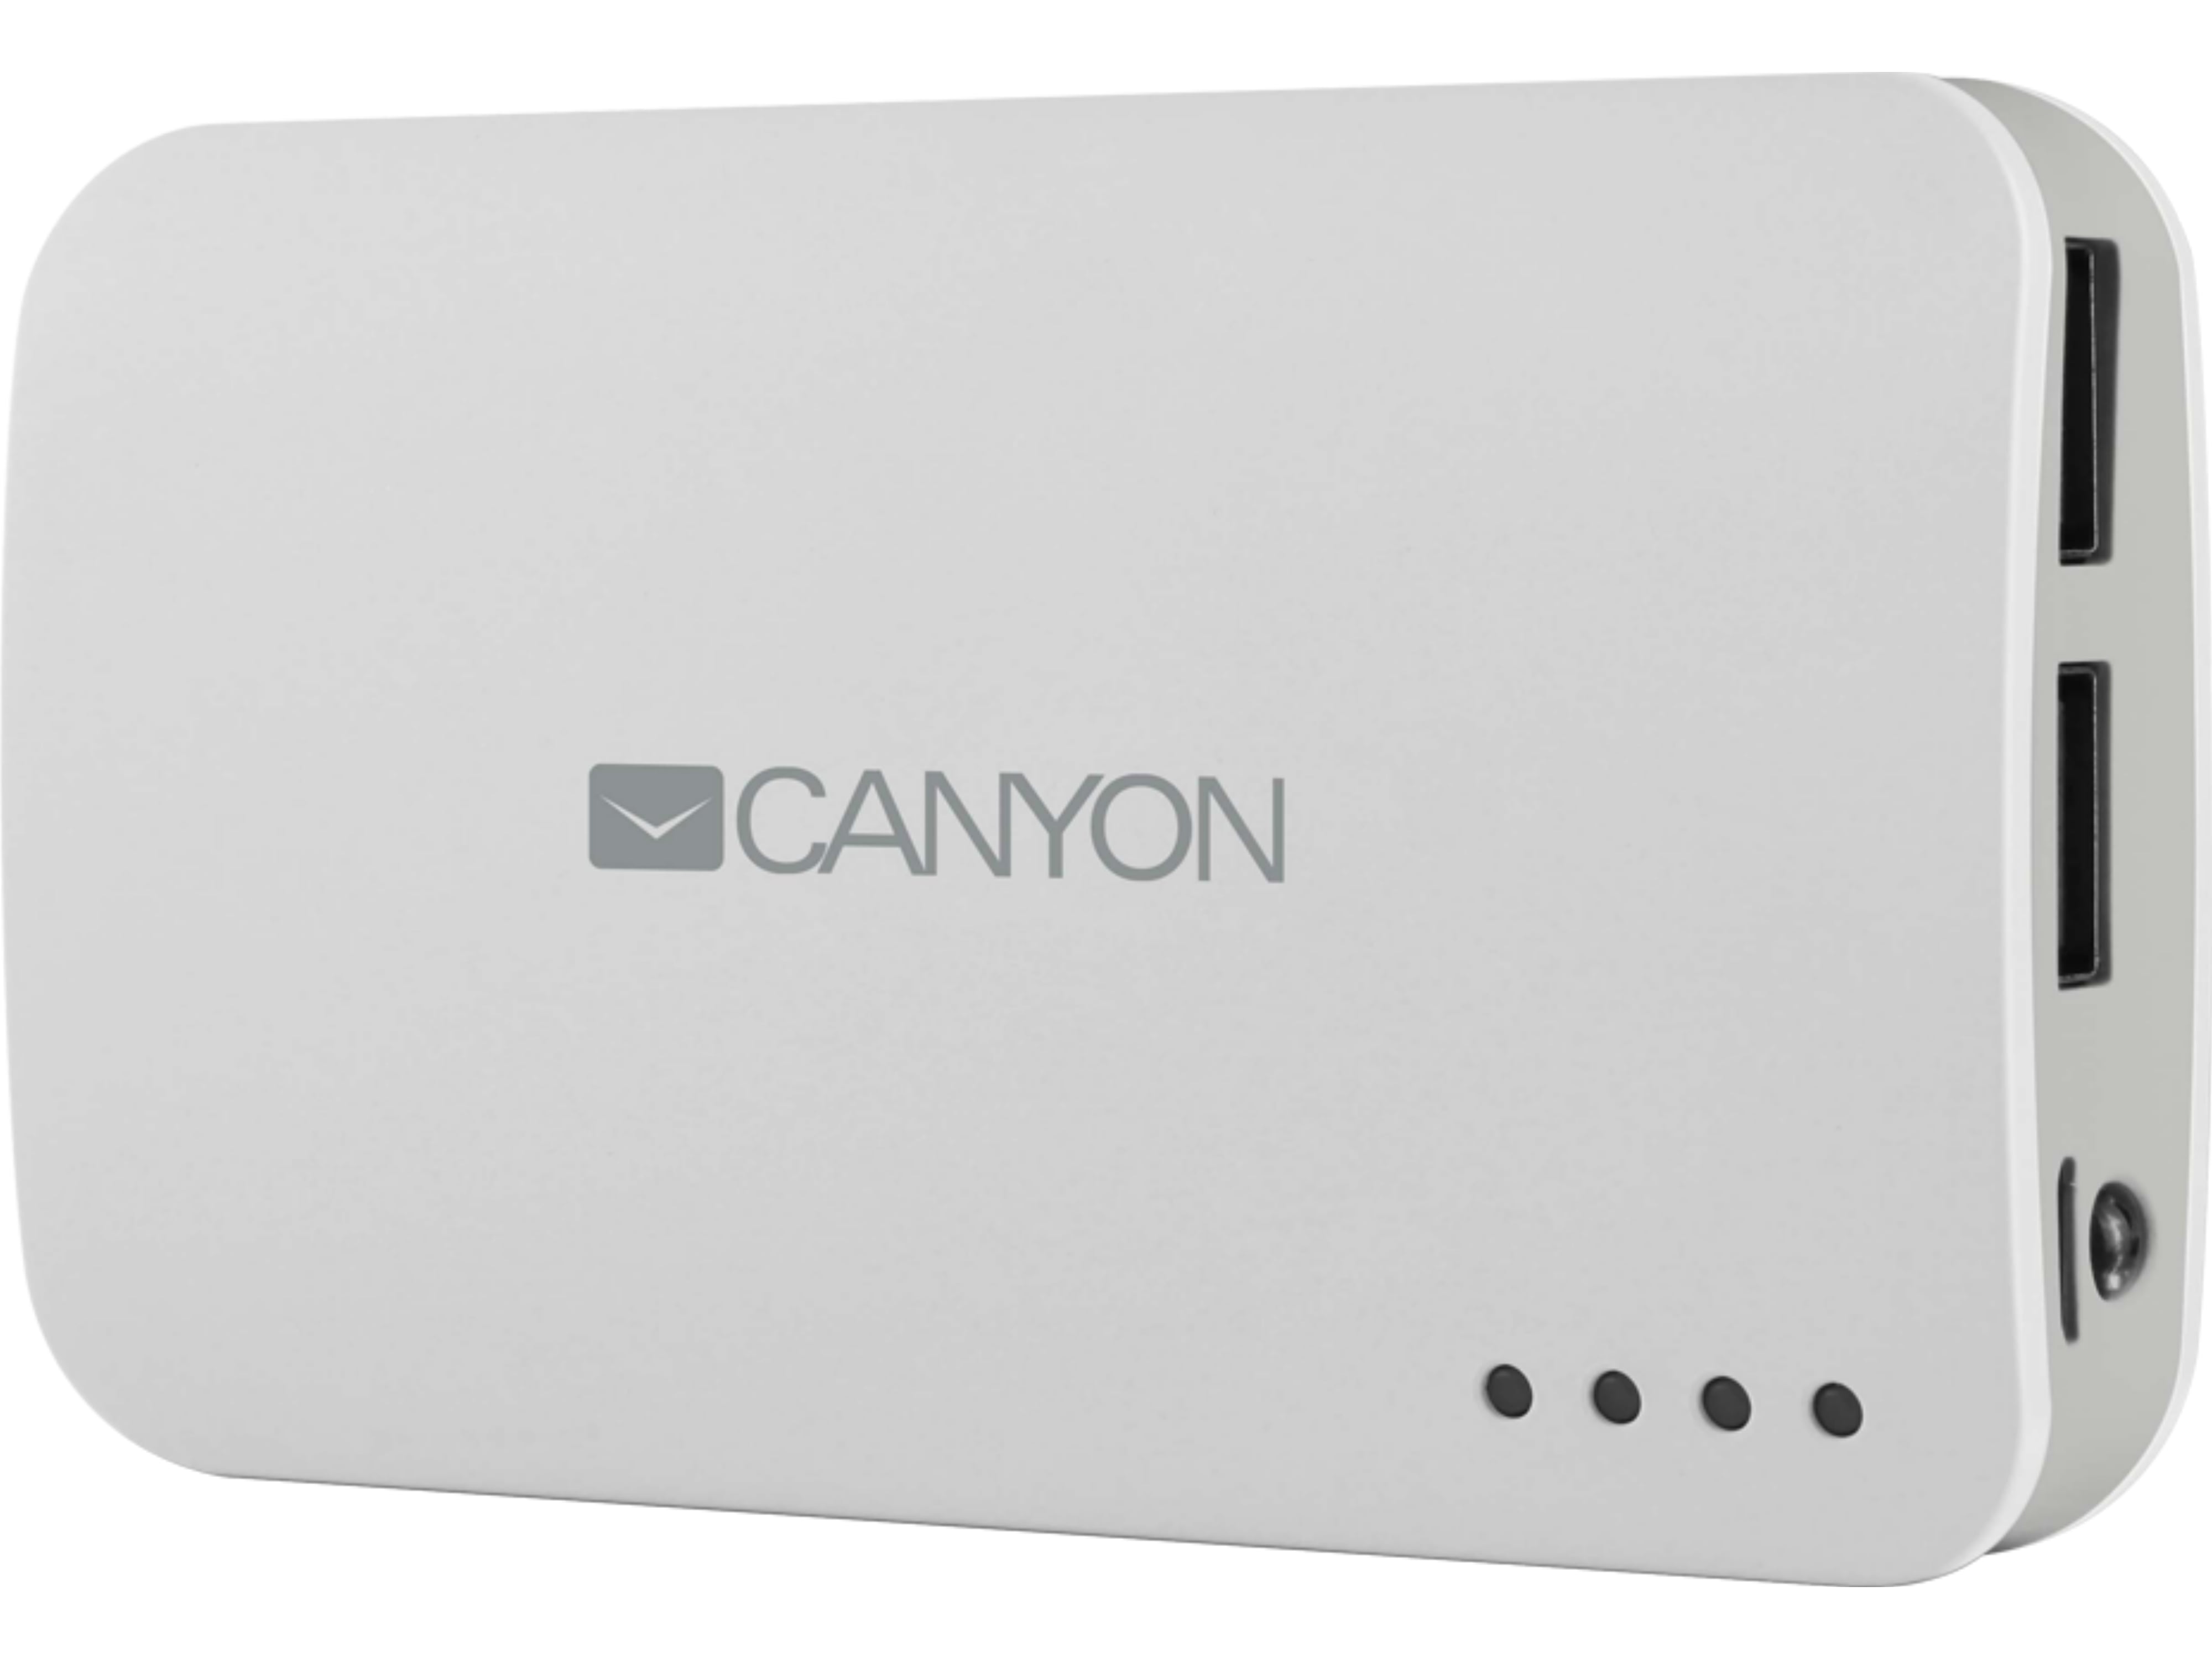 Canyon внешний. Внешний аккумулятор Canyon CNE-cpb78w белый. Canyon внешний аккумулятор CNE-cpb78dg. Canyon Power Bank 7800mah. Повер банк Canyon 7800mah.